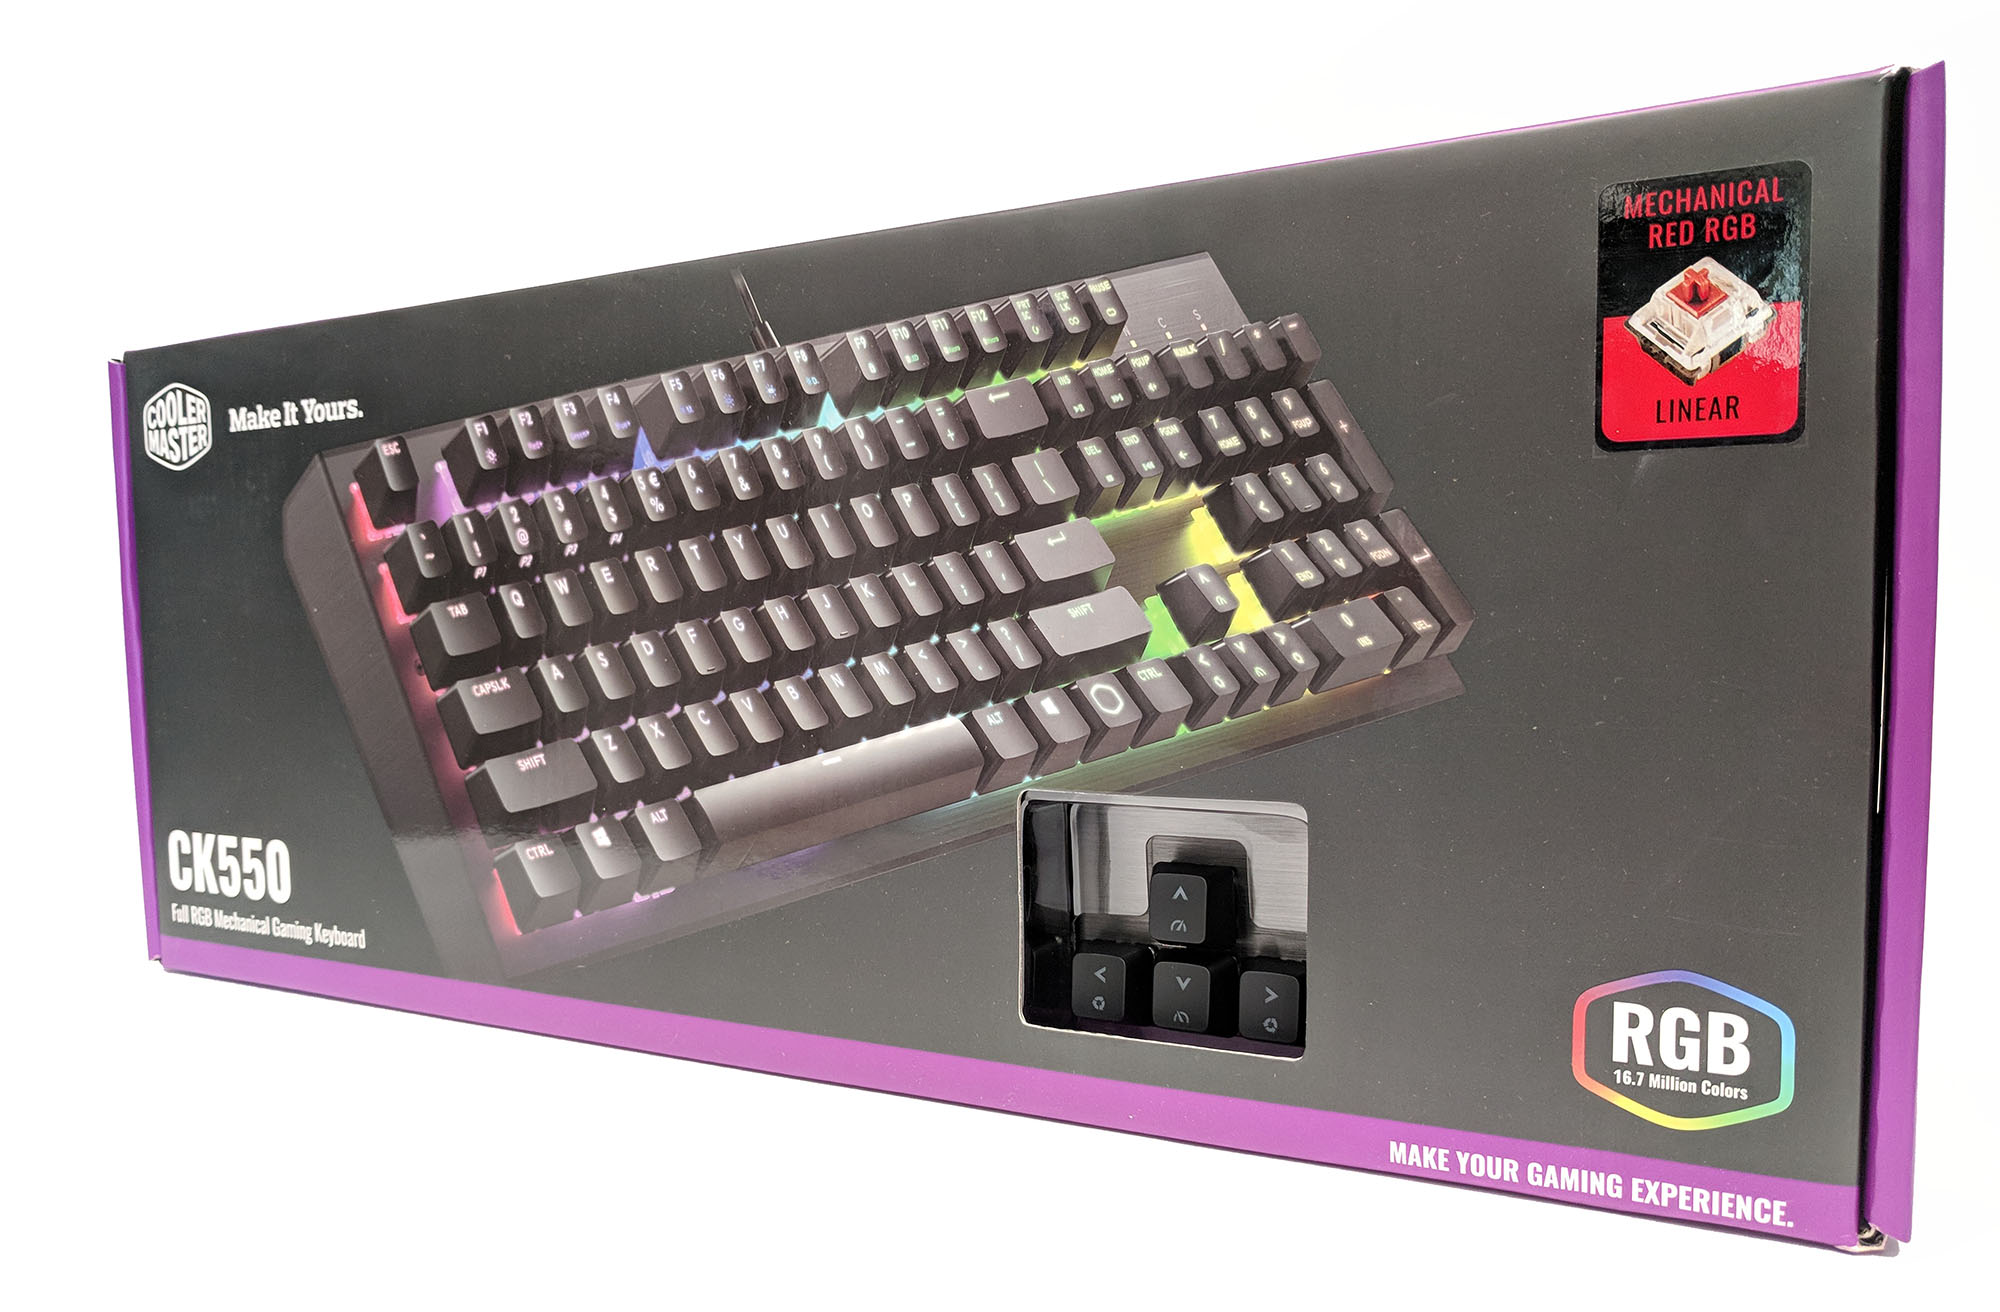 Cooler Master Ck550 Mechanical Gaming Keyboard Review Gnd Tech